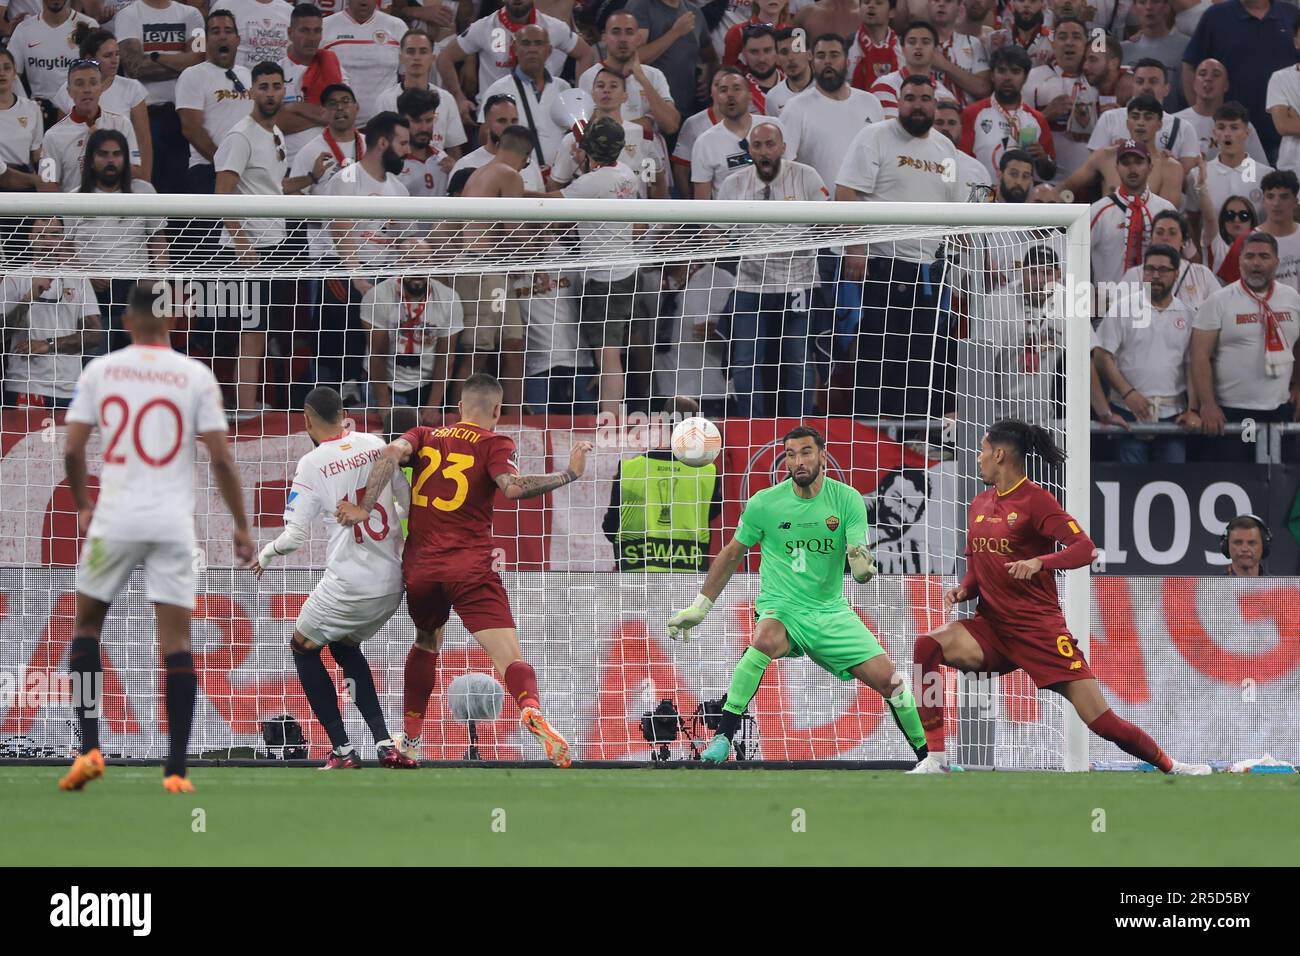 Amer Gojak of Ferencvarosi TC celebrates after scoring a goal during  News Photo - Getty Images